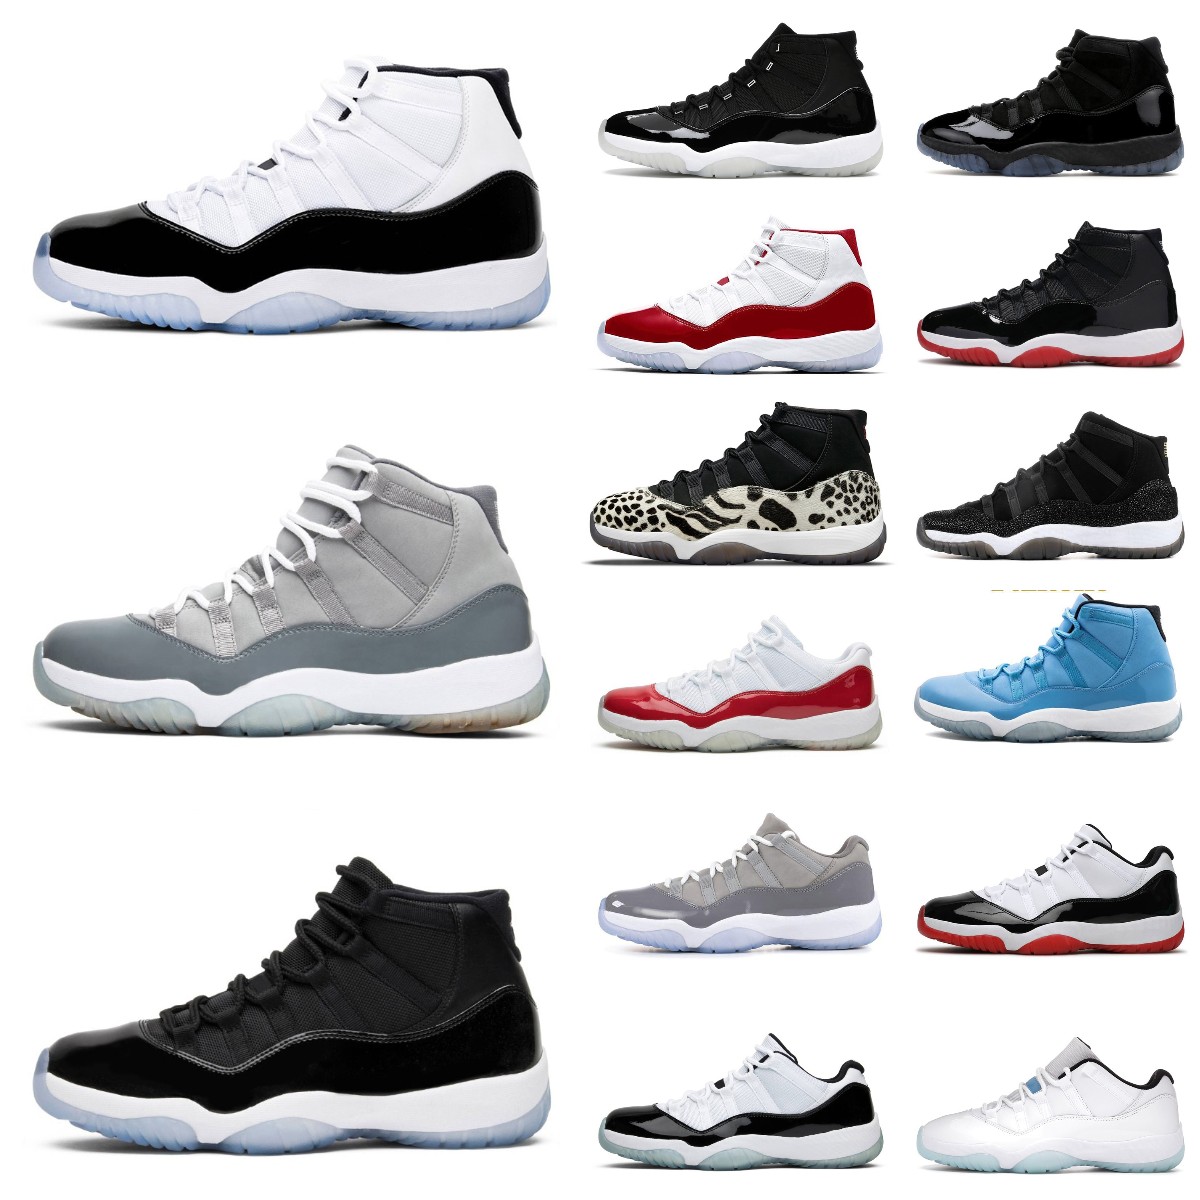 2023 Nuevos zapatos de baloncesto para hombre 11 zapatos de baloncesto grises 11s zapatillas de deporte Concord Jub Jubilee Cherry Legend Blue Bred Pure Violet Unc Sports Trainers 36-47